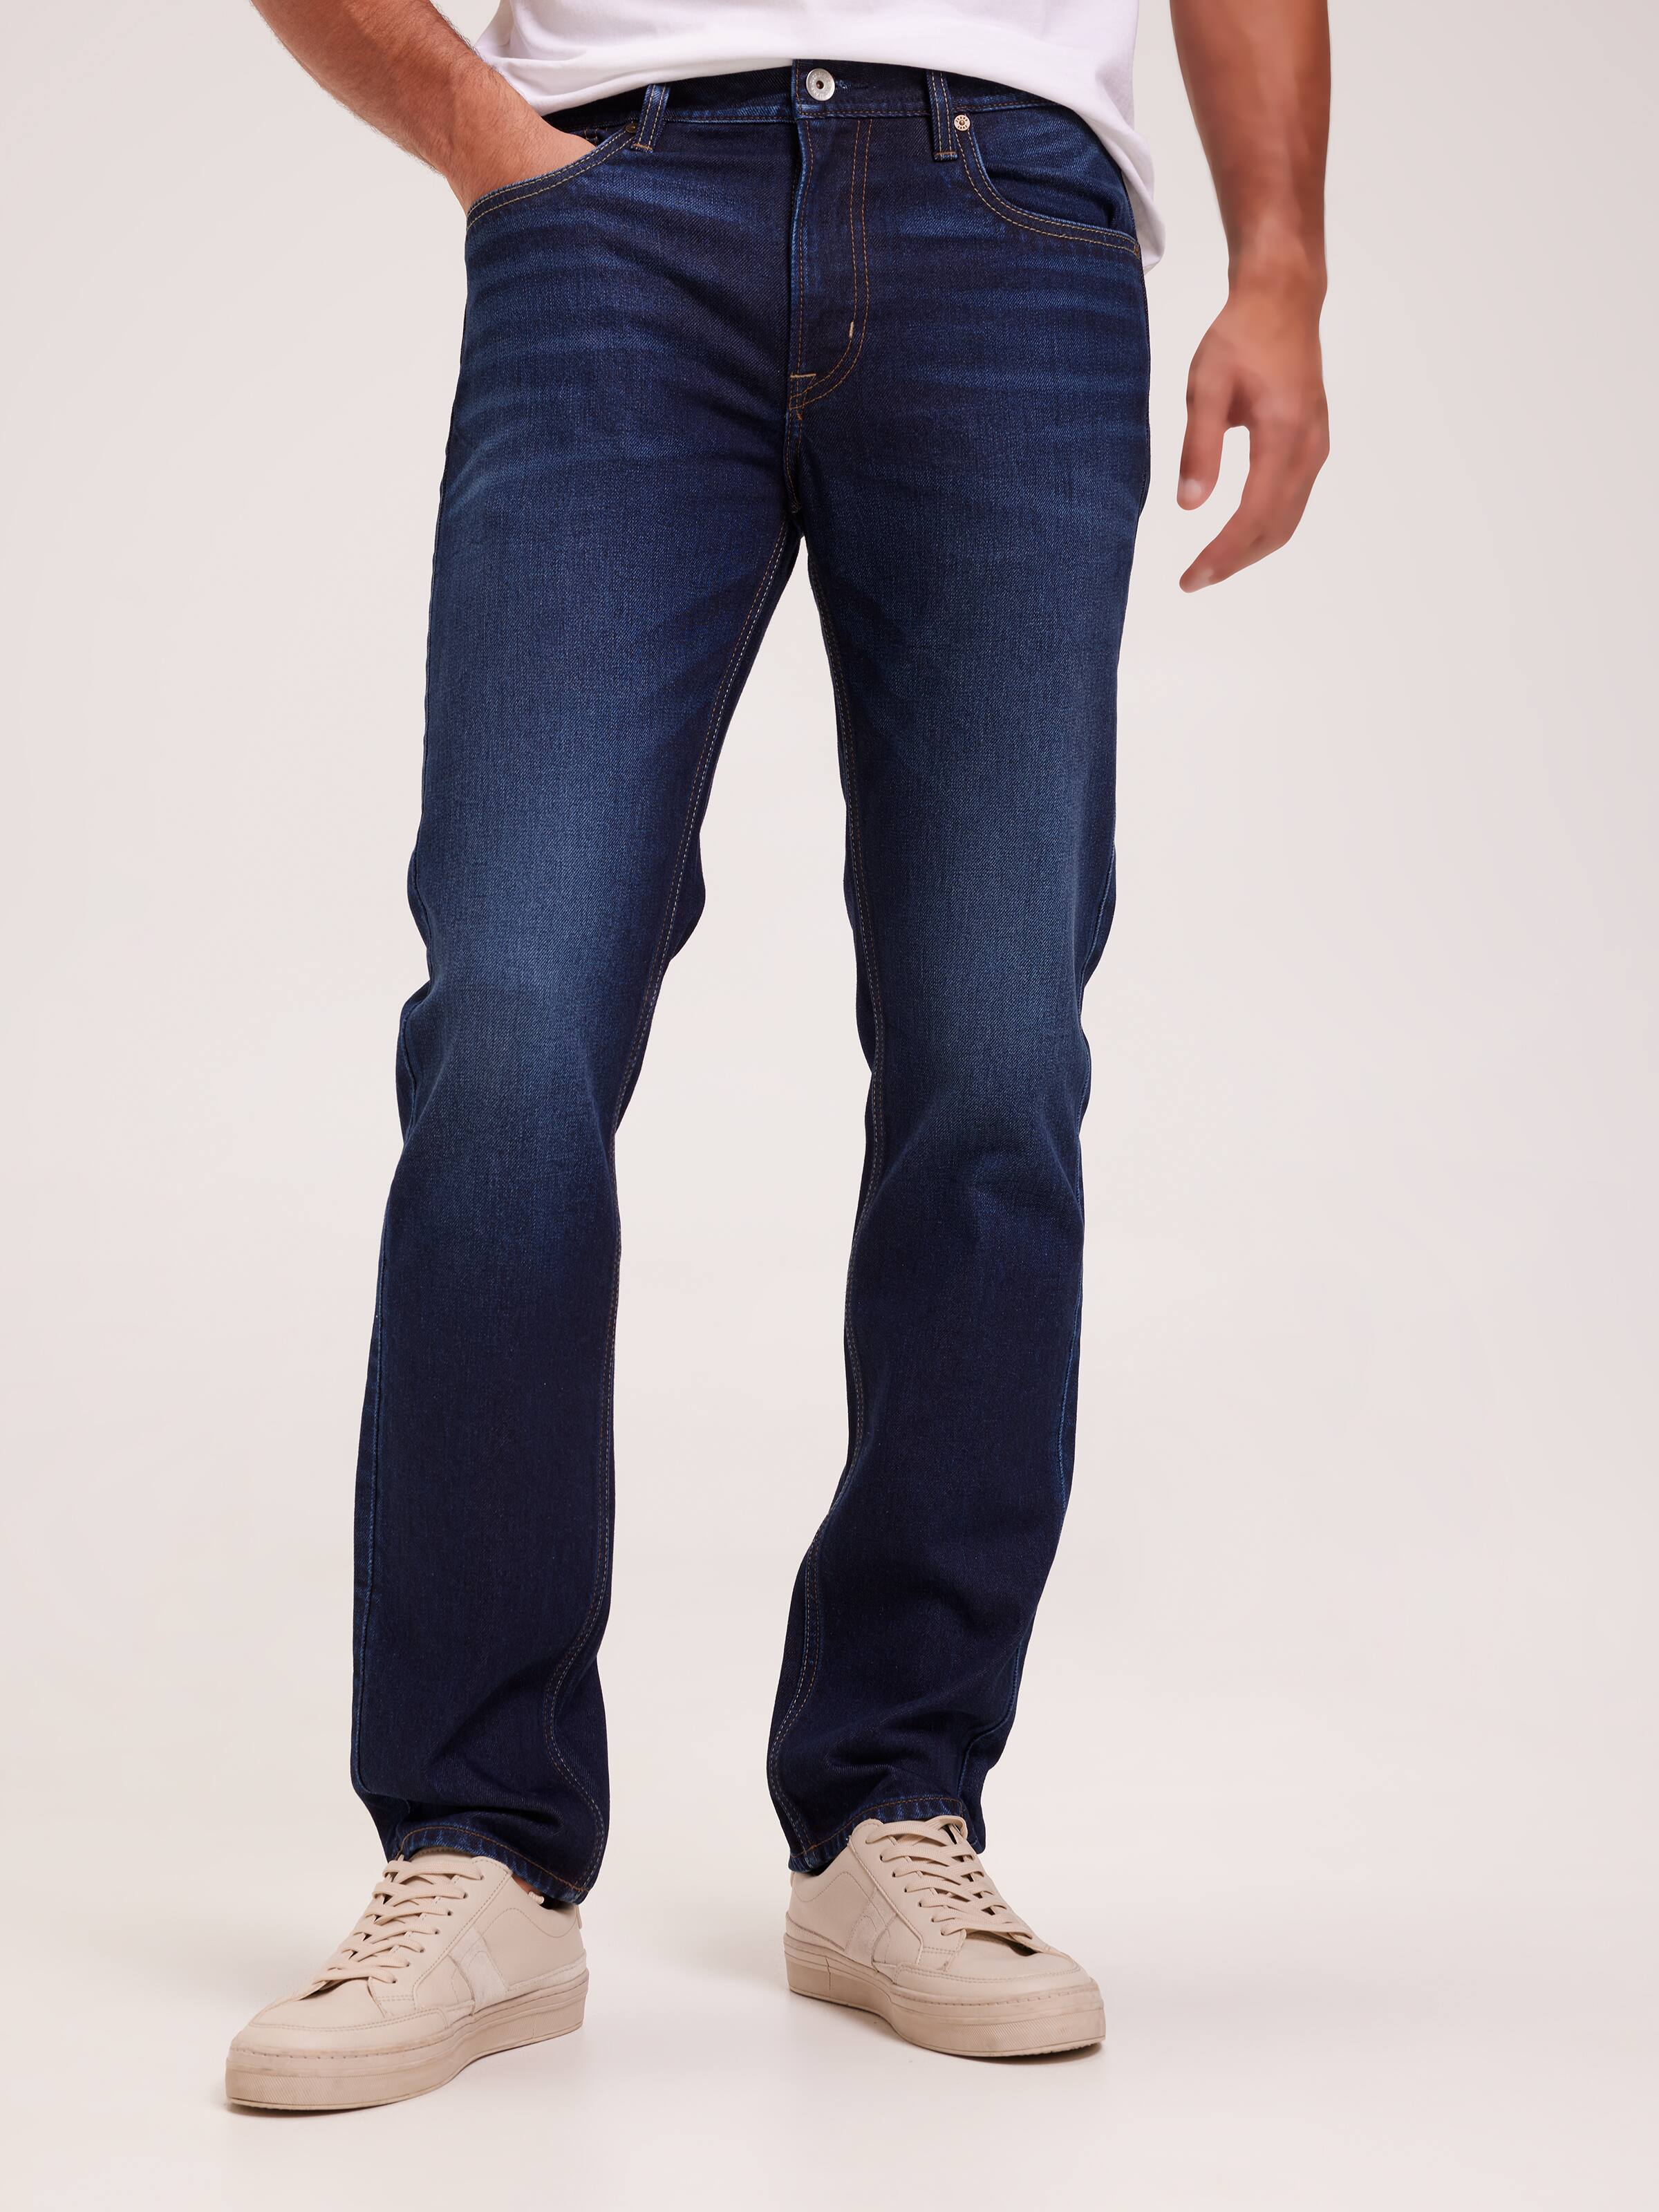 Men's Slim Jeans  Just Jeans Online